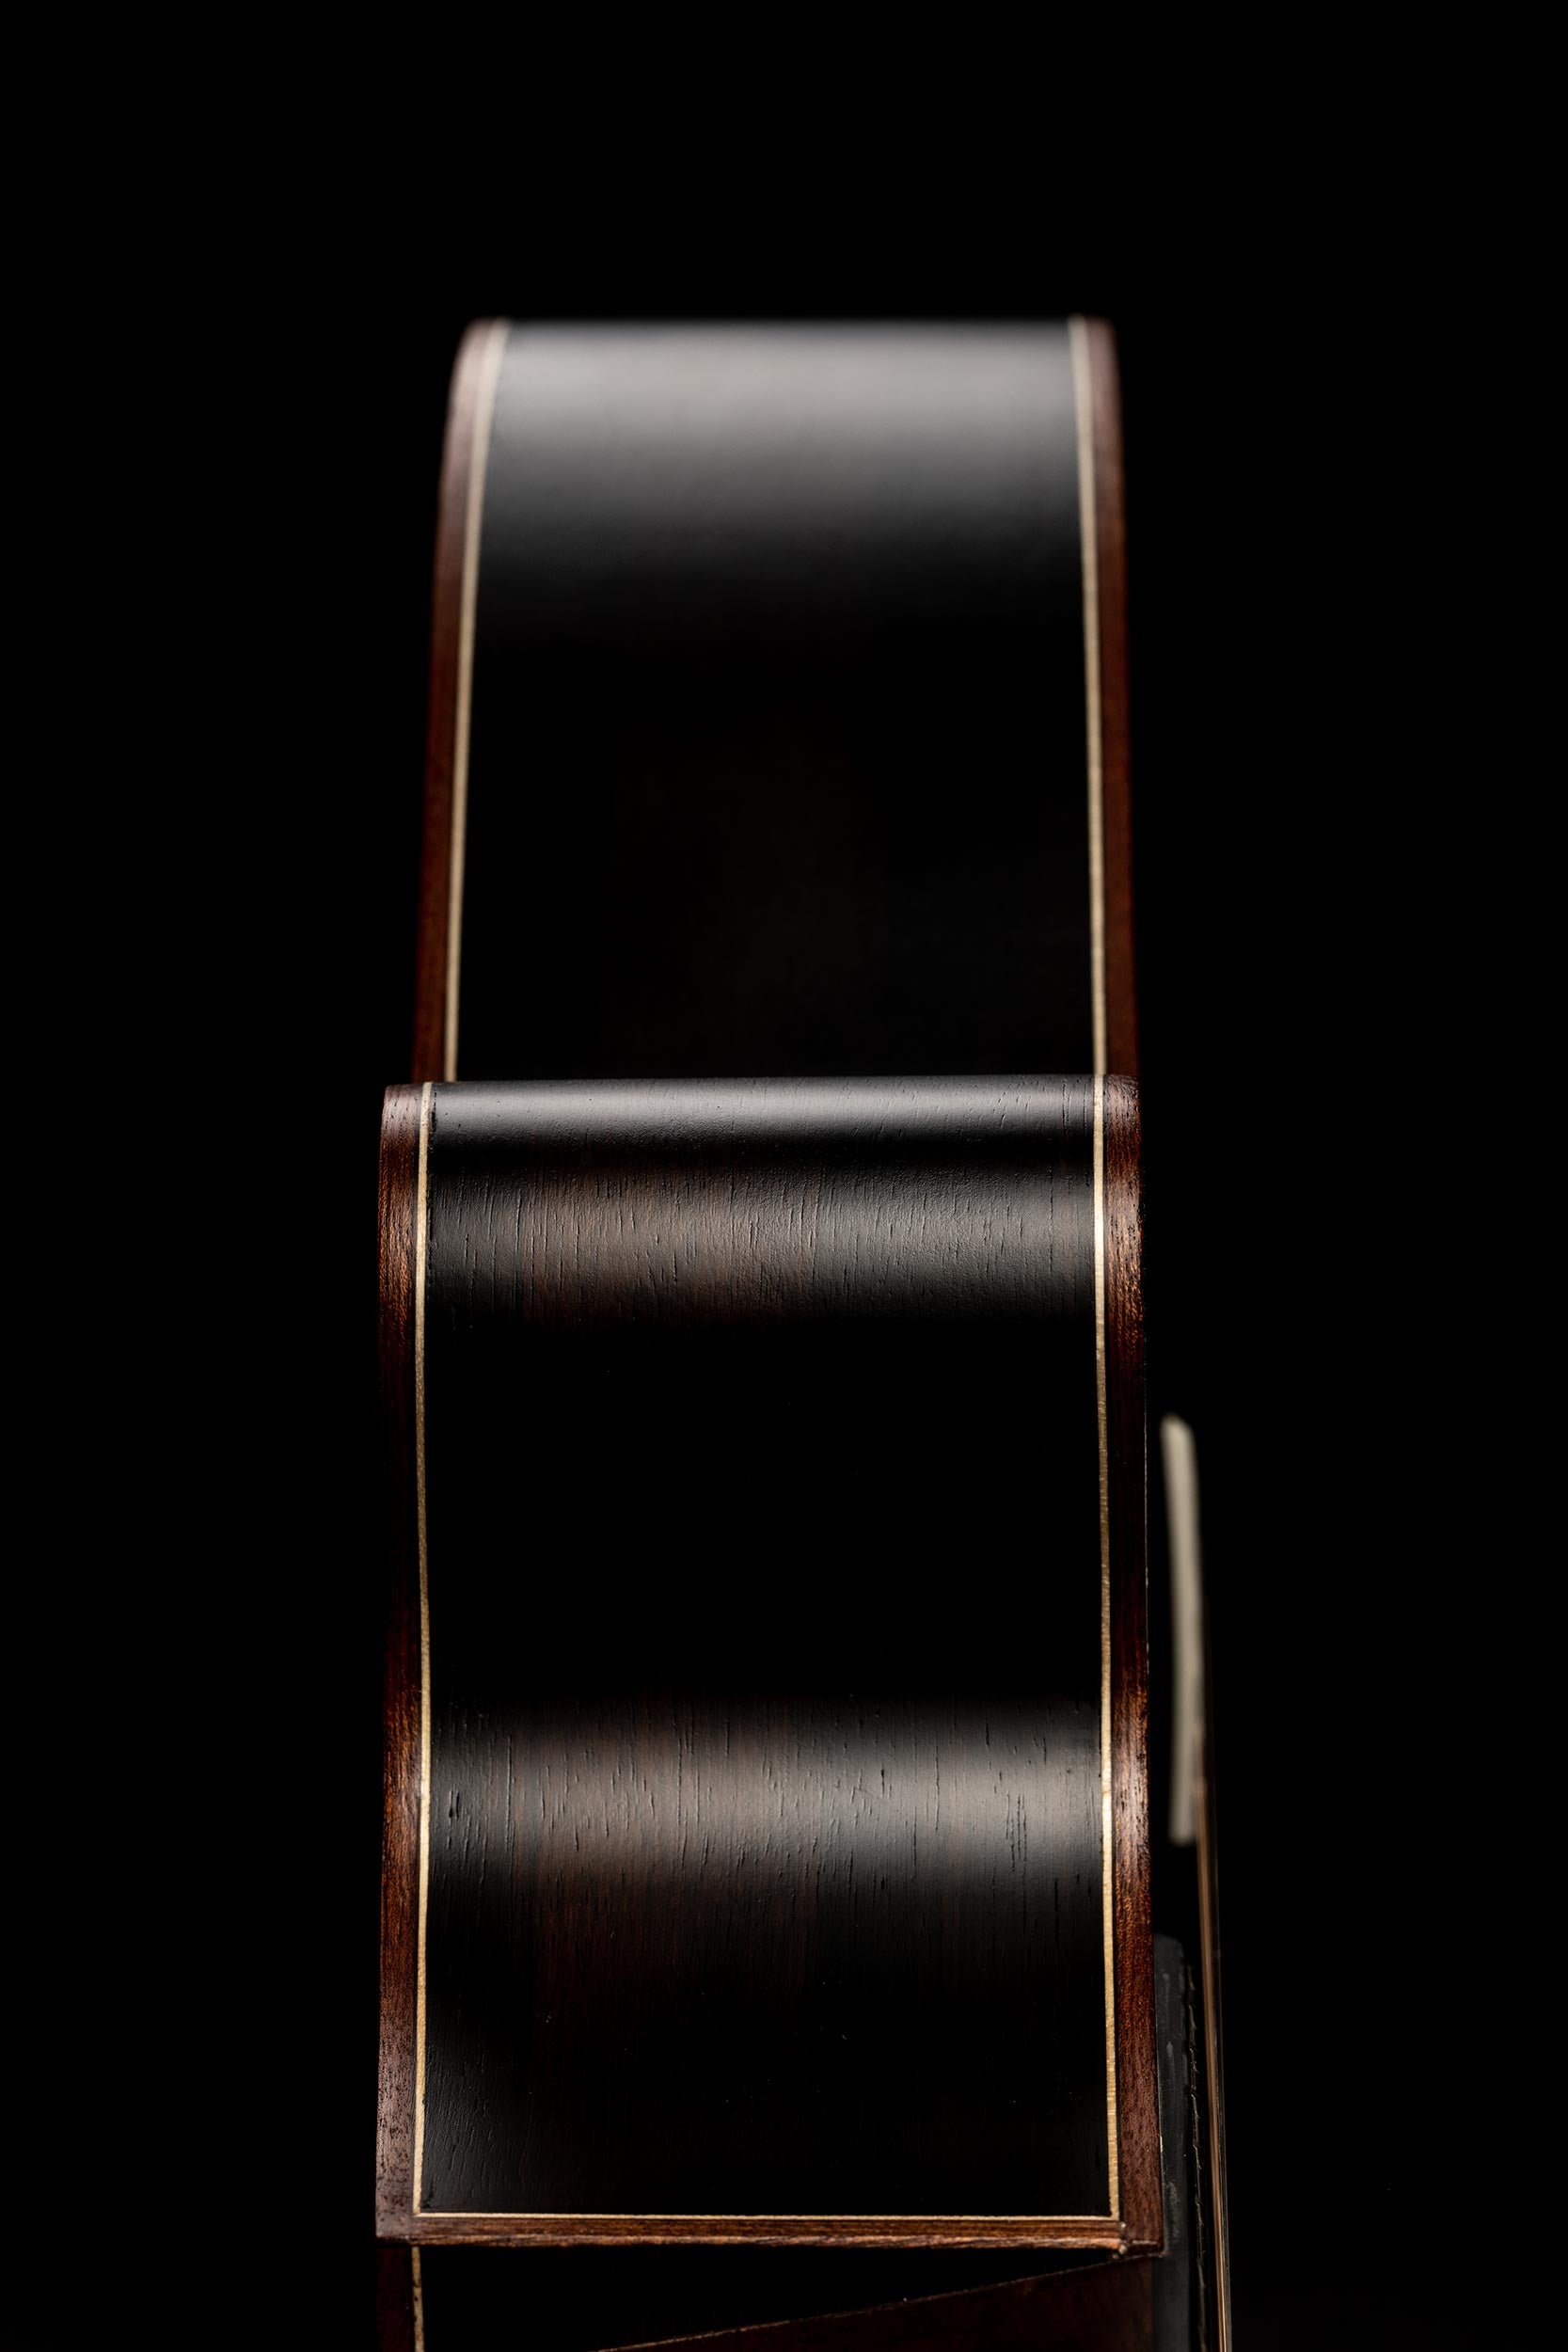 Dowina Scetis GACE, Acoustic Guitar for sale at Richards Guitars.